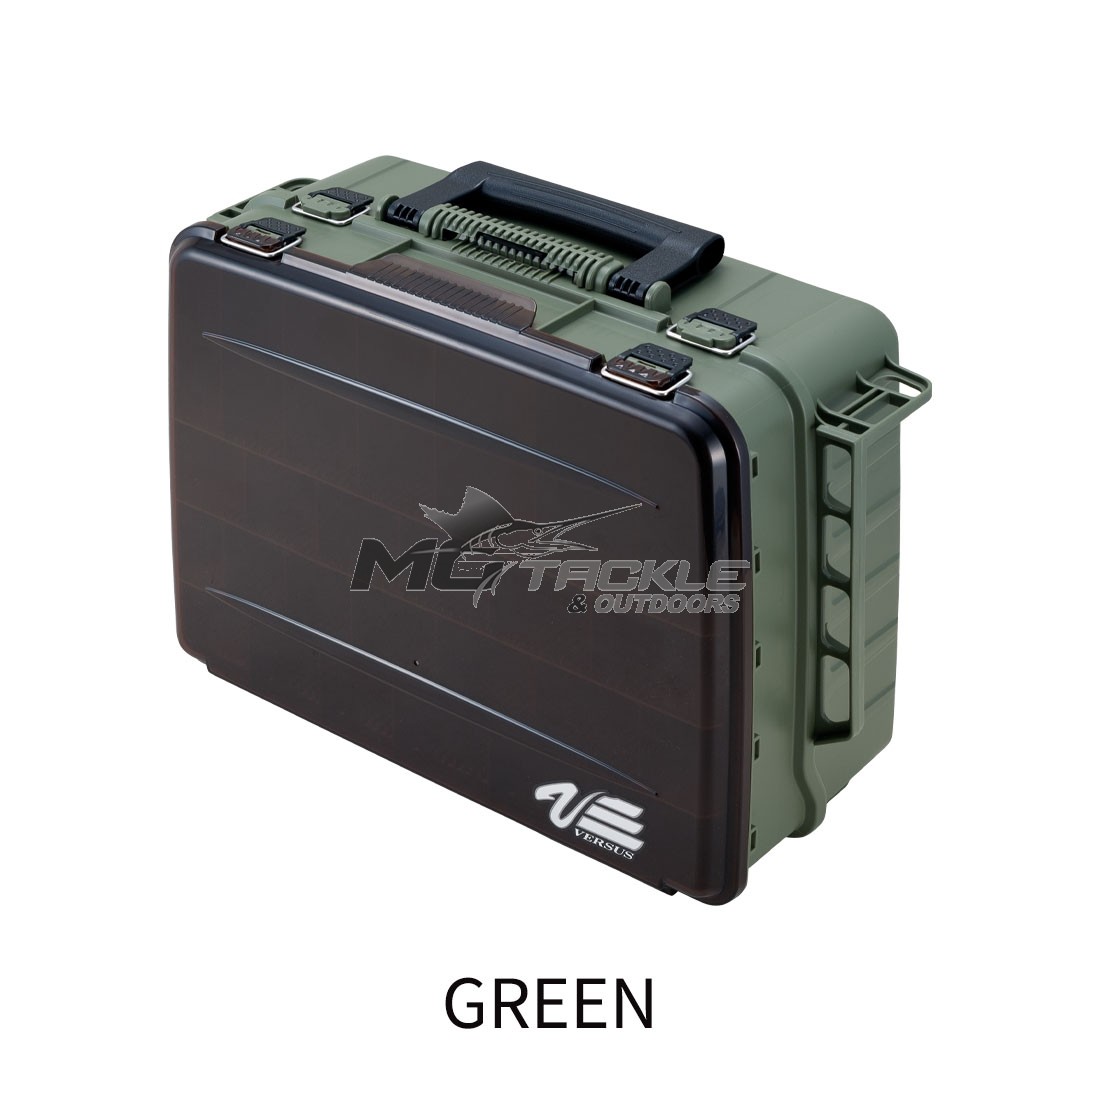 Versus Meiho VS-3080 Value Bundle Tackle Box